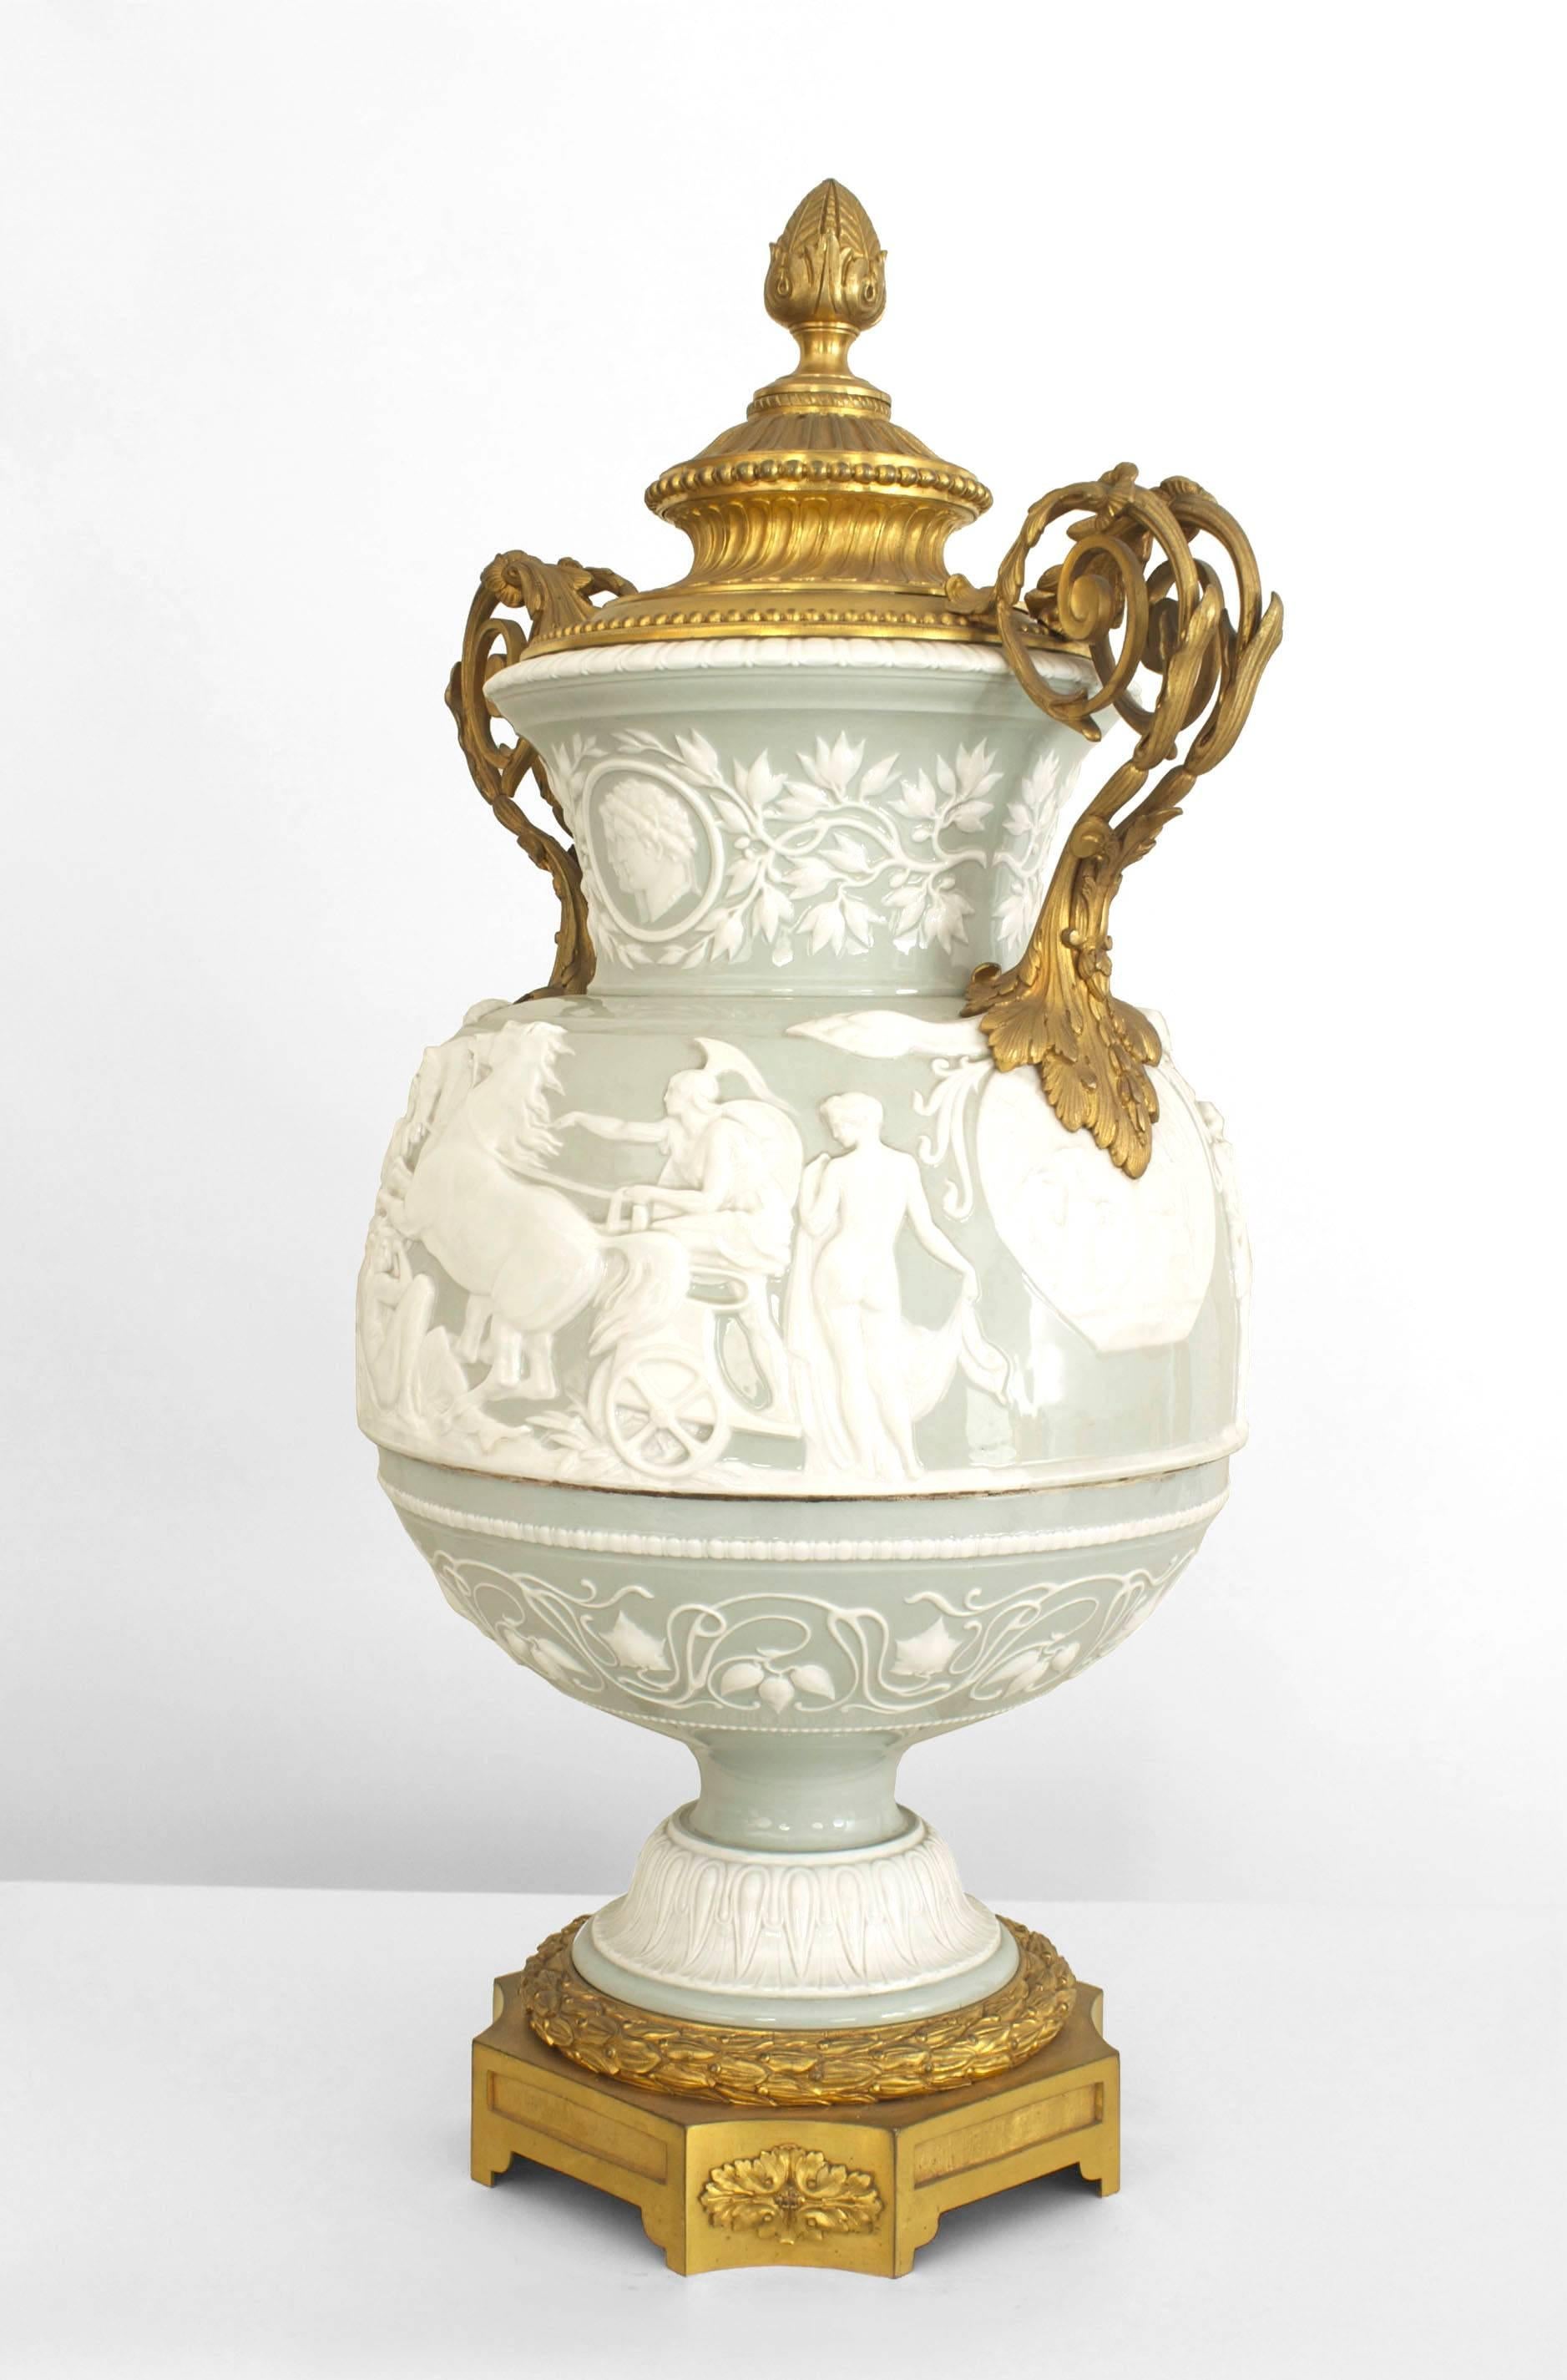 victorian vase